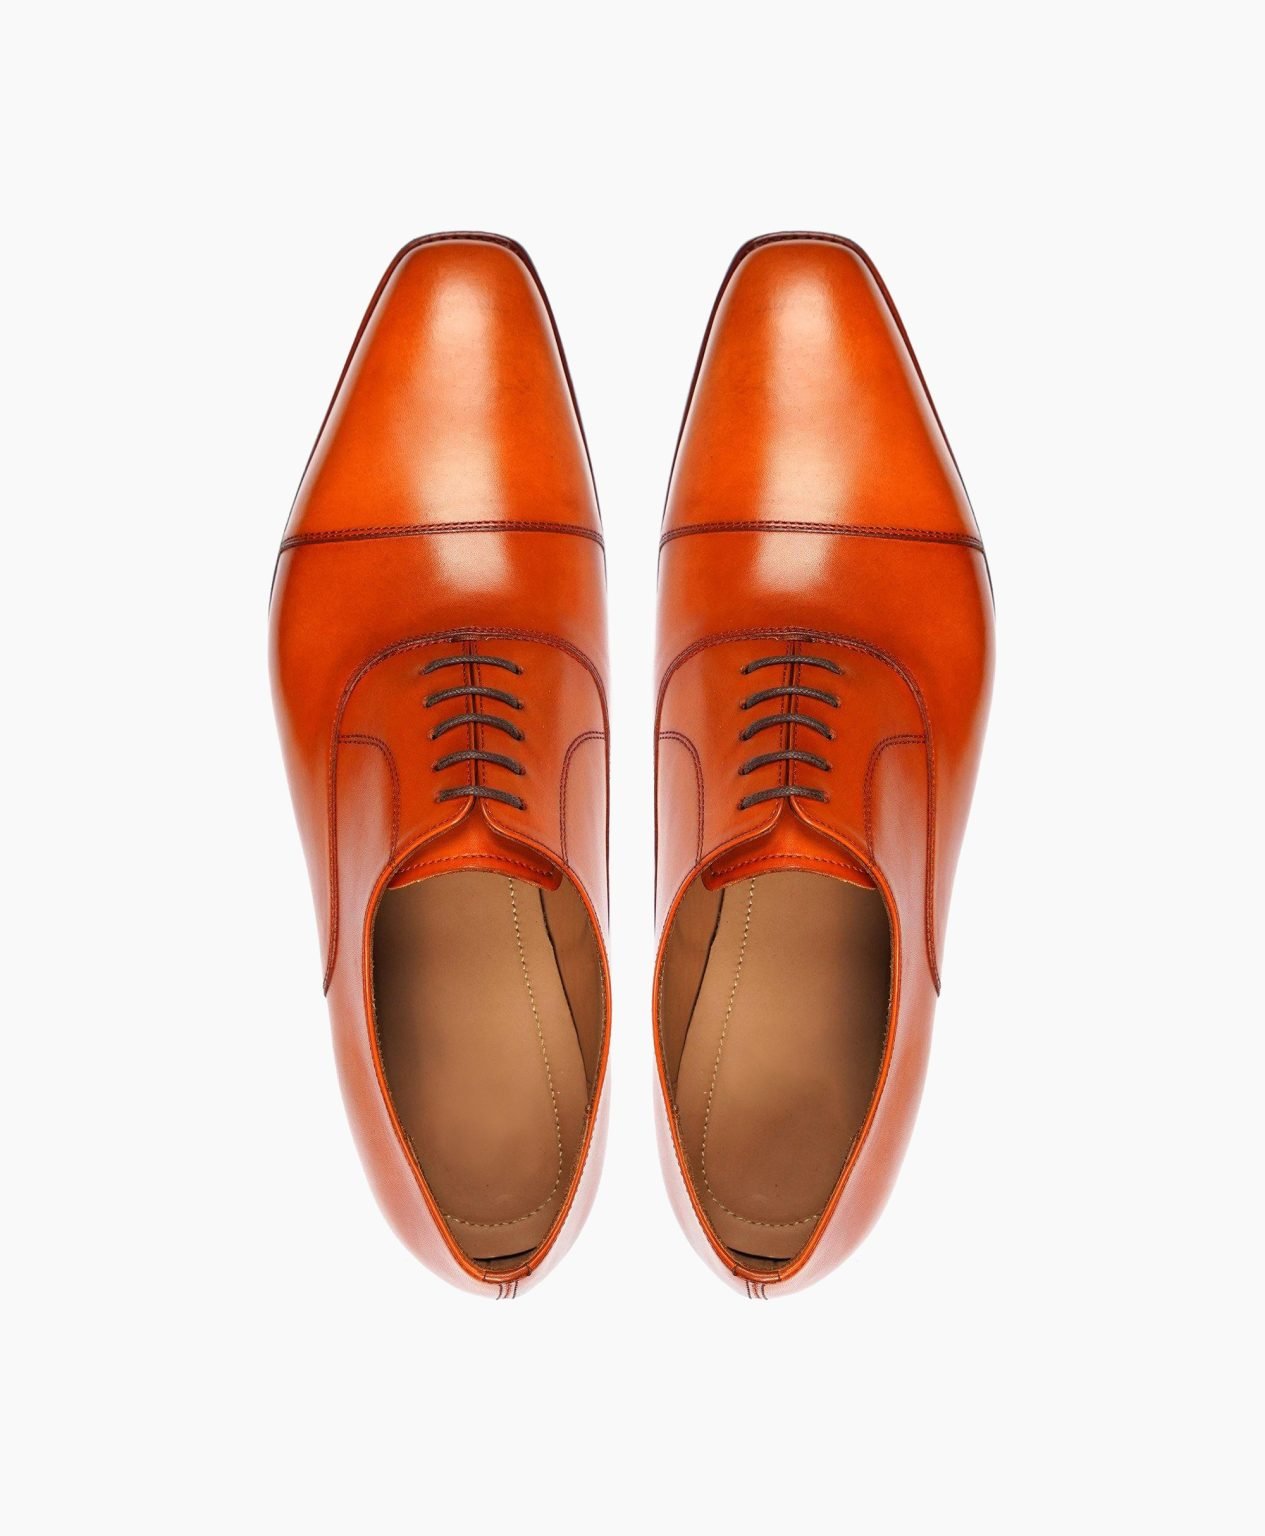 helston-oxford-orange-tan-leather-shoes-image202